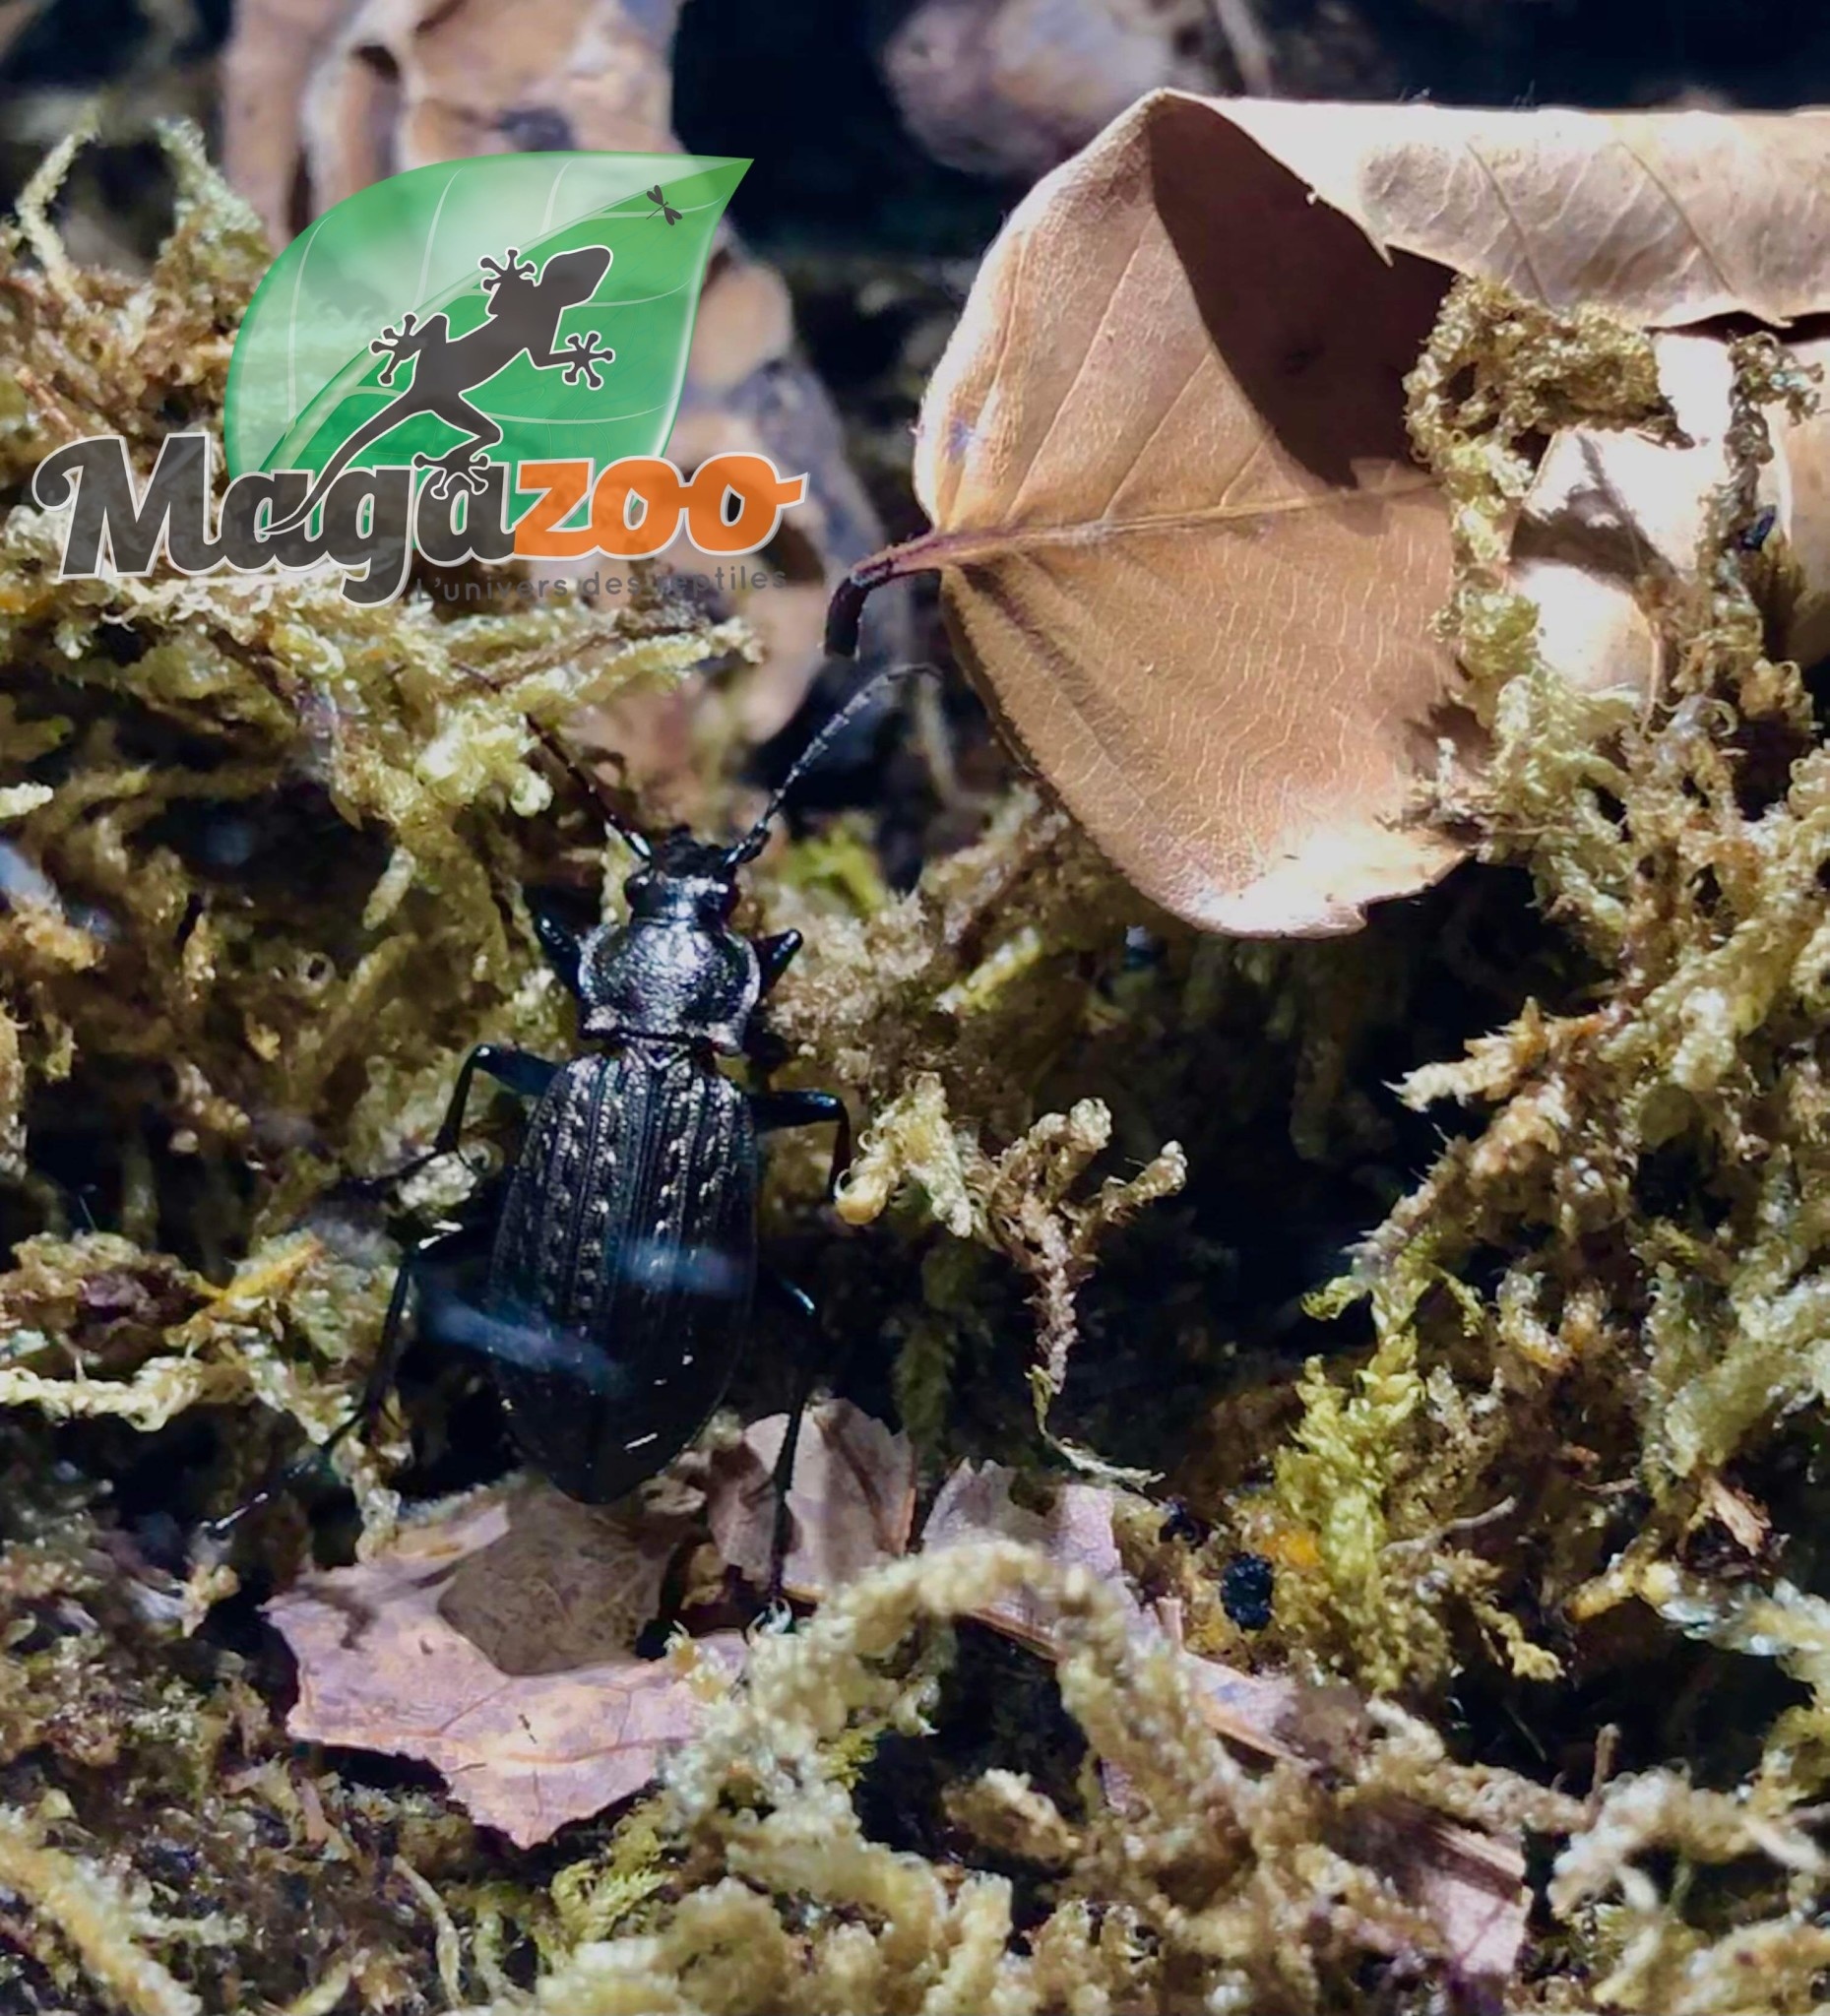 Magazoo Ground beetle (Carabus granulatus)